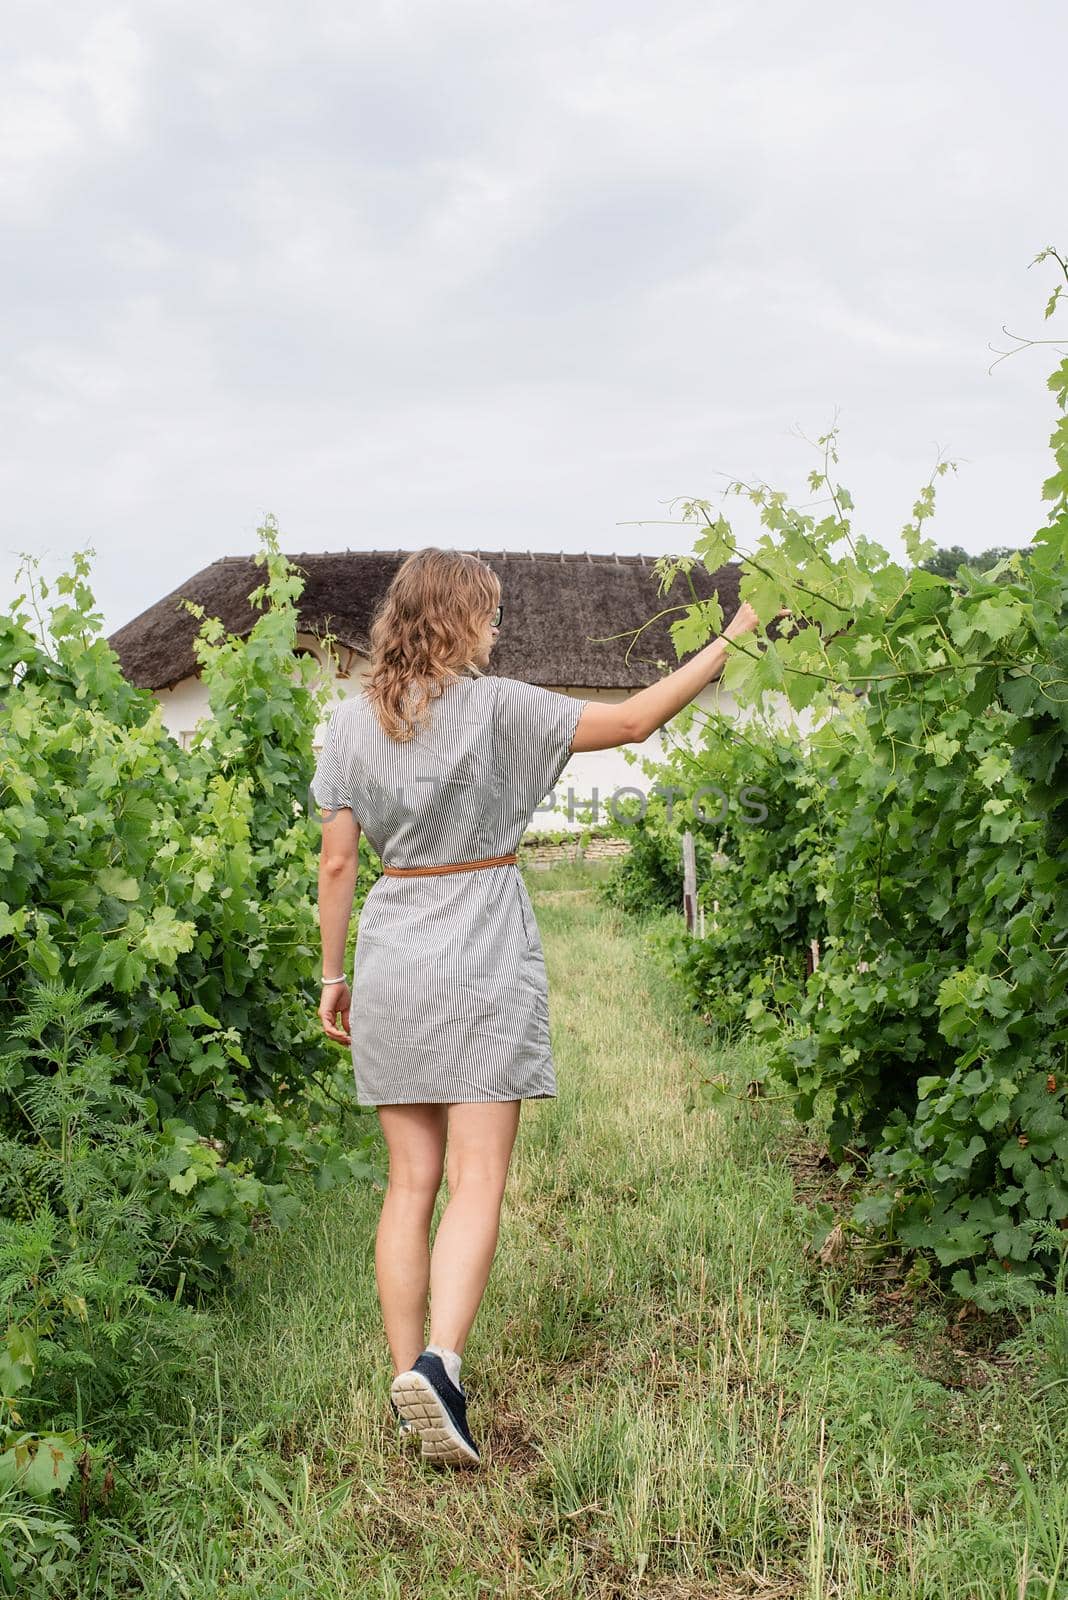 Woman walking in a vineyard, back view by Desperada